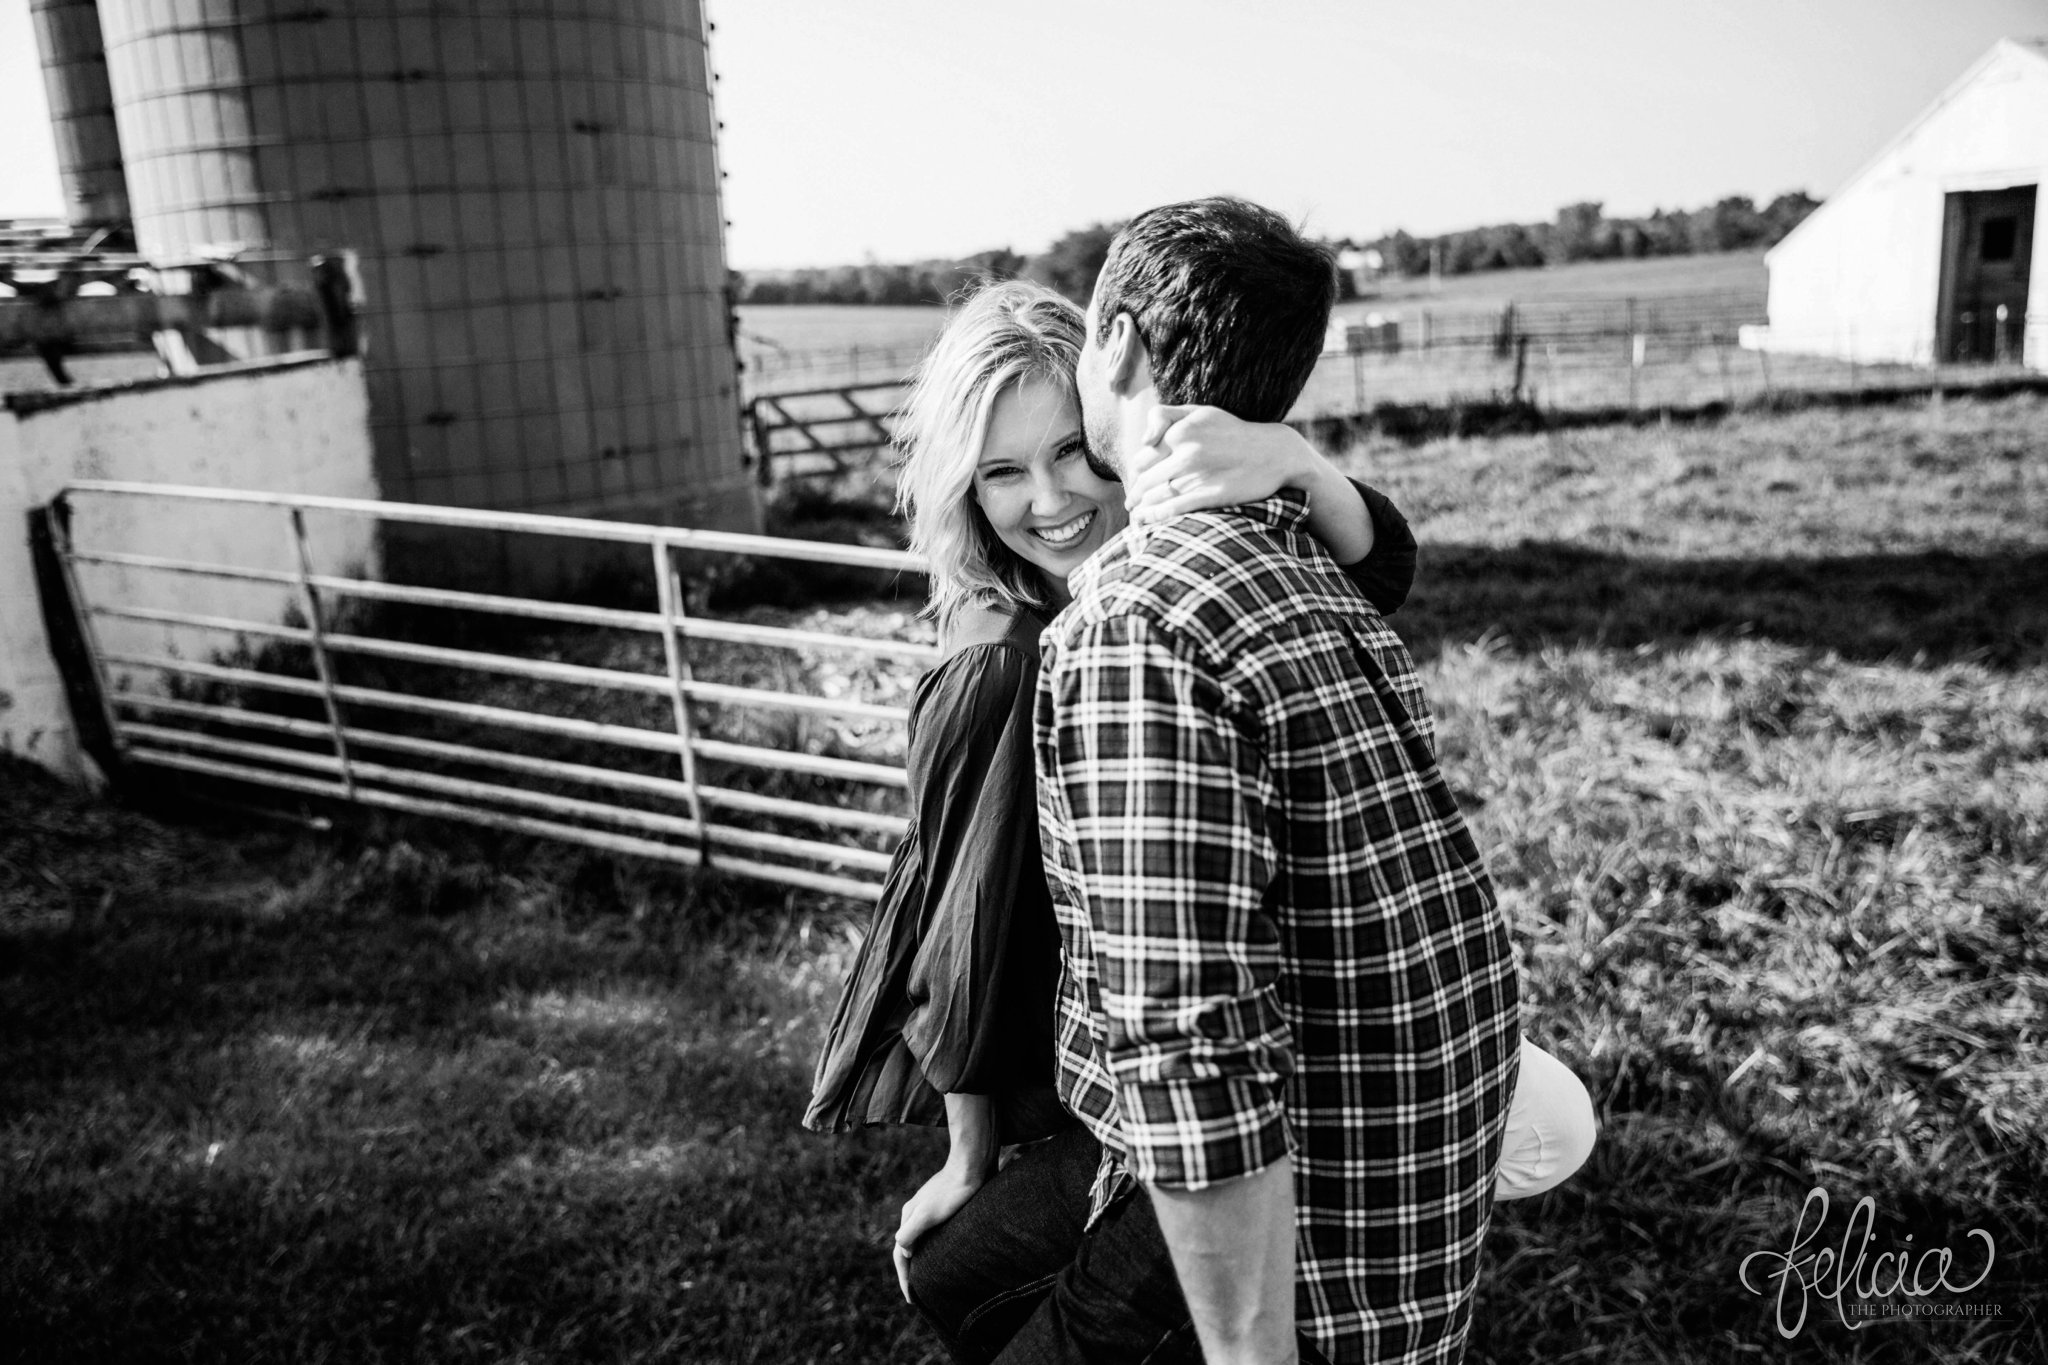 Sunrise Engagement Photos | Felicia The Photographer | Family Farm | Black and White | Candid | Sitting On Fence | Plaid Shirt